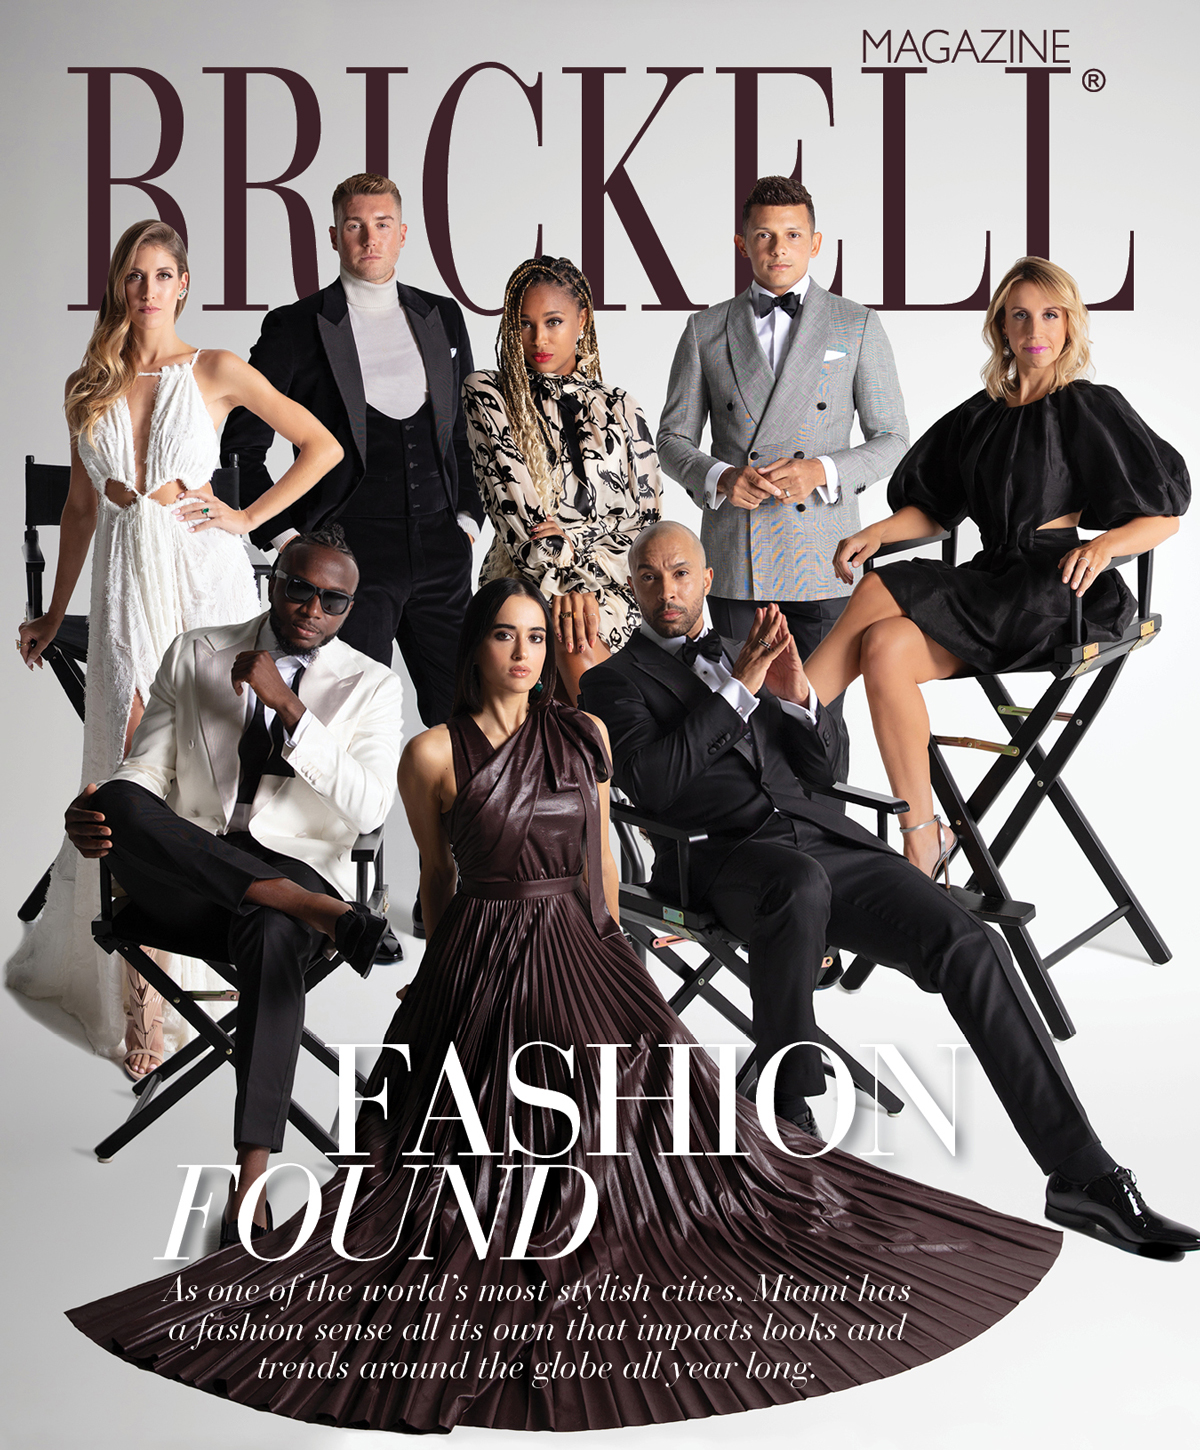 Brickell Born — Brickell Magazine